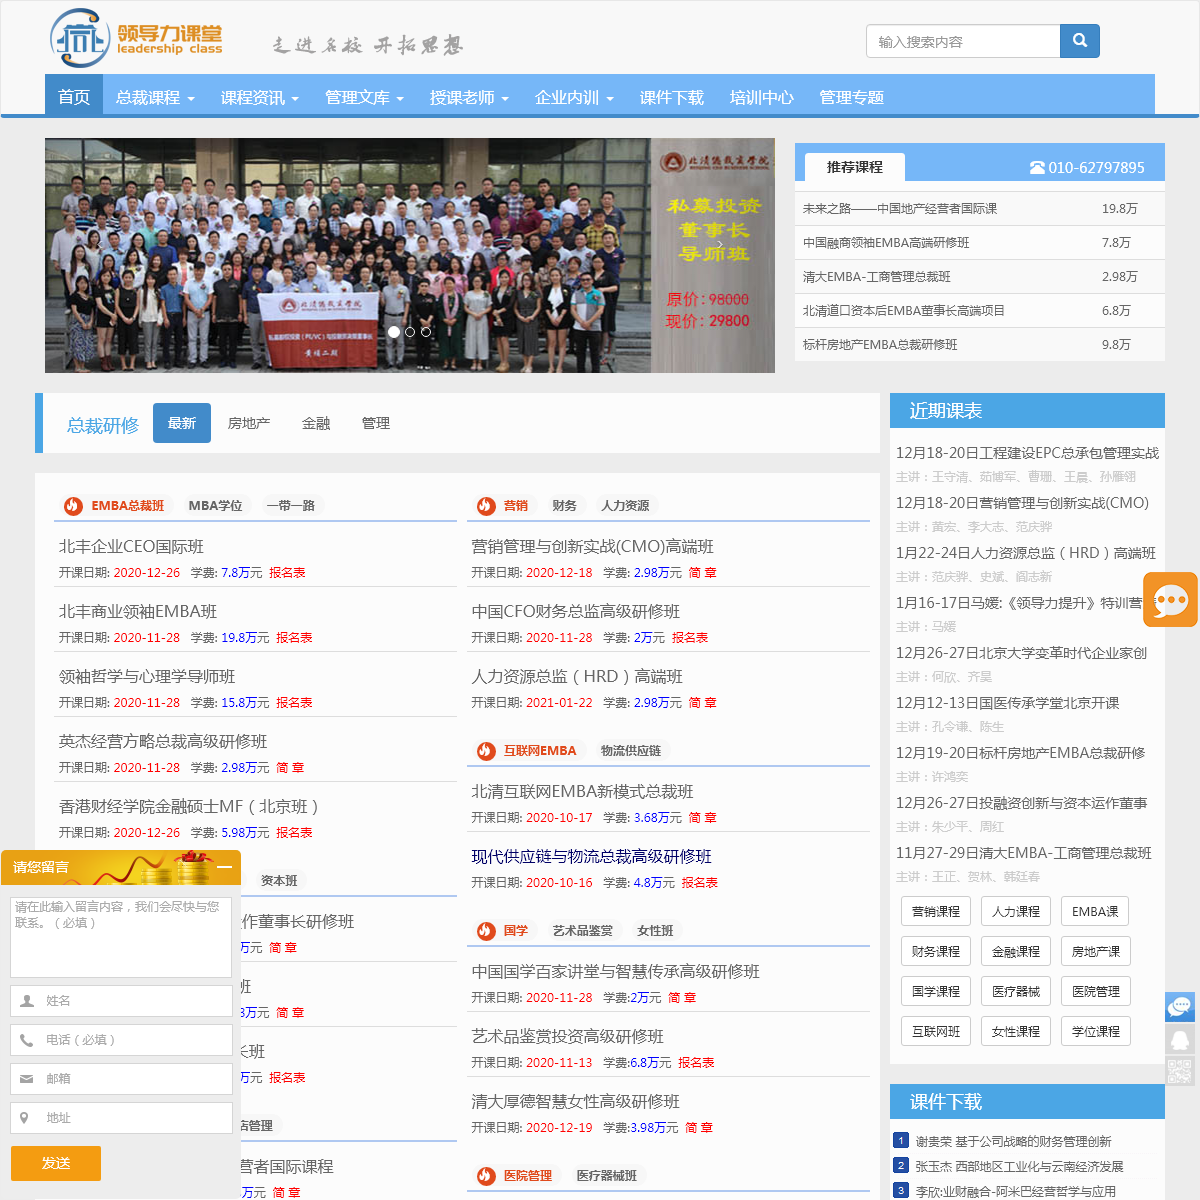 A complete backup of gototsinghua.org.cn